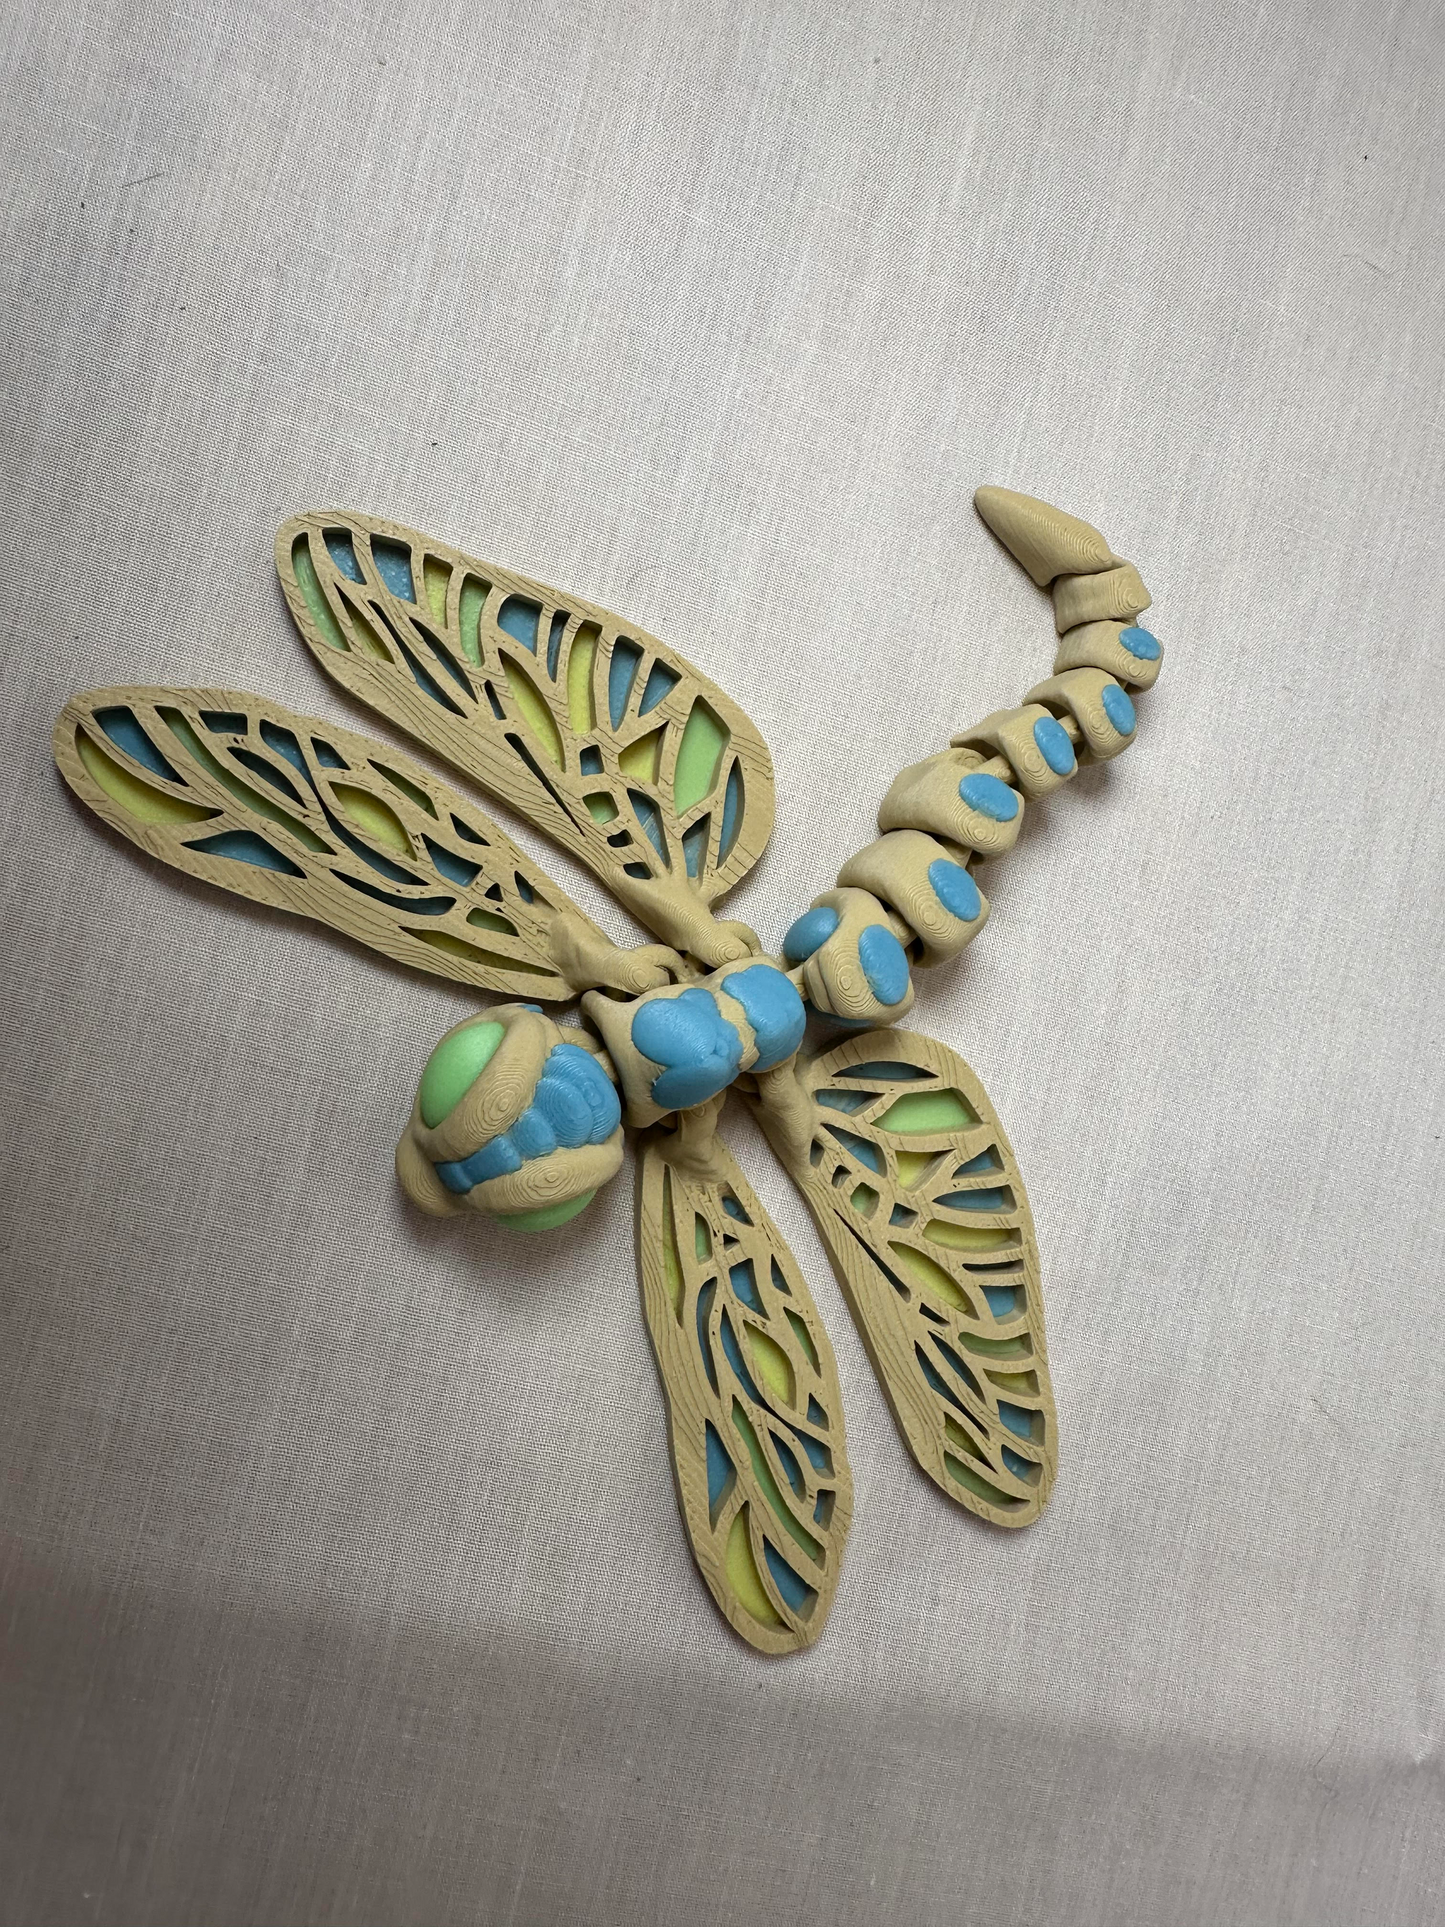 3D Articulating Dragonfly Decorative Figurine Fidget